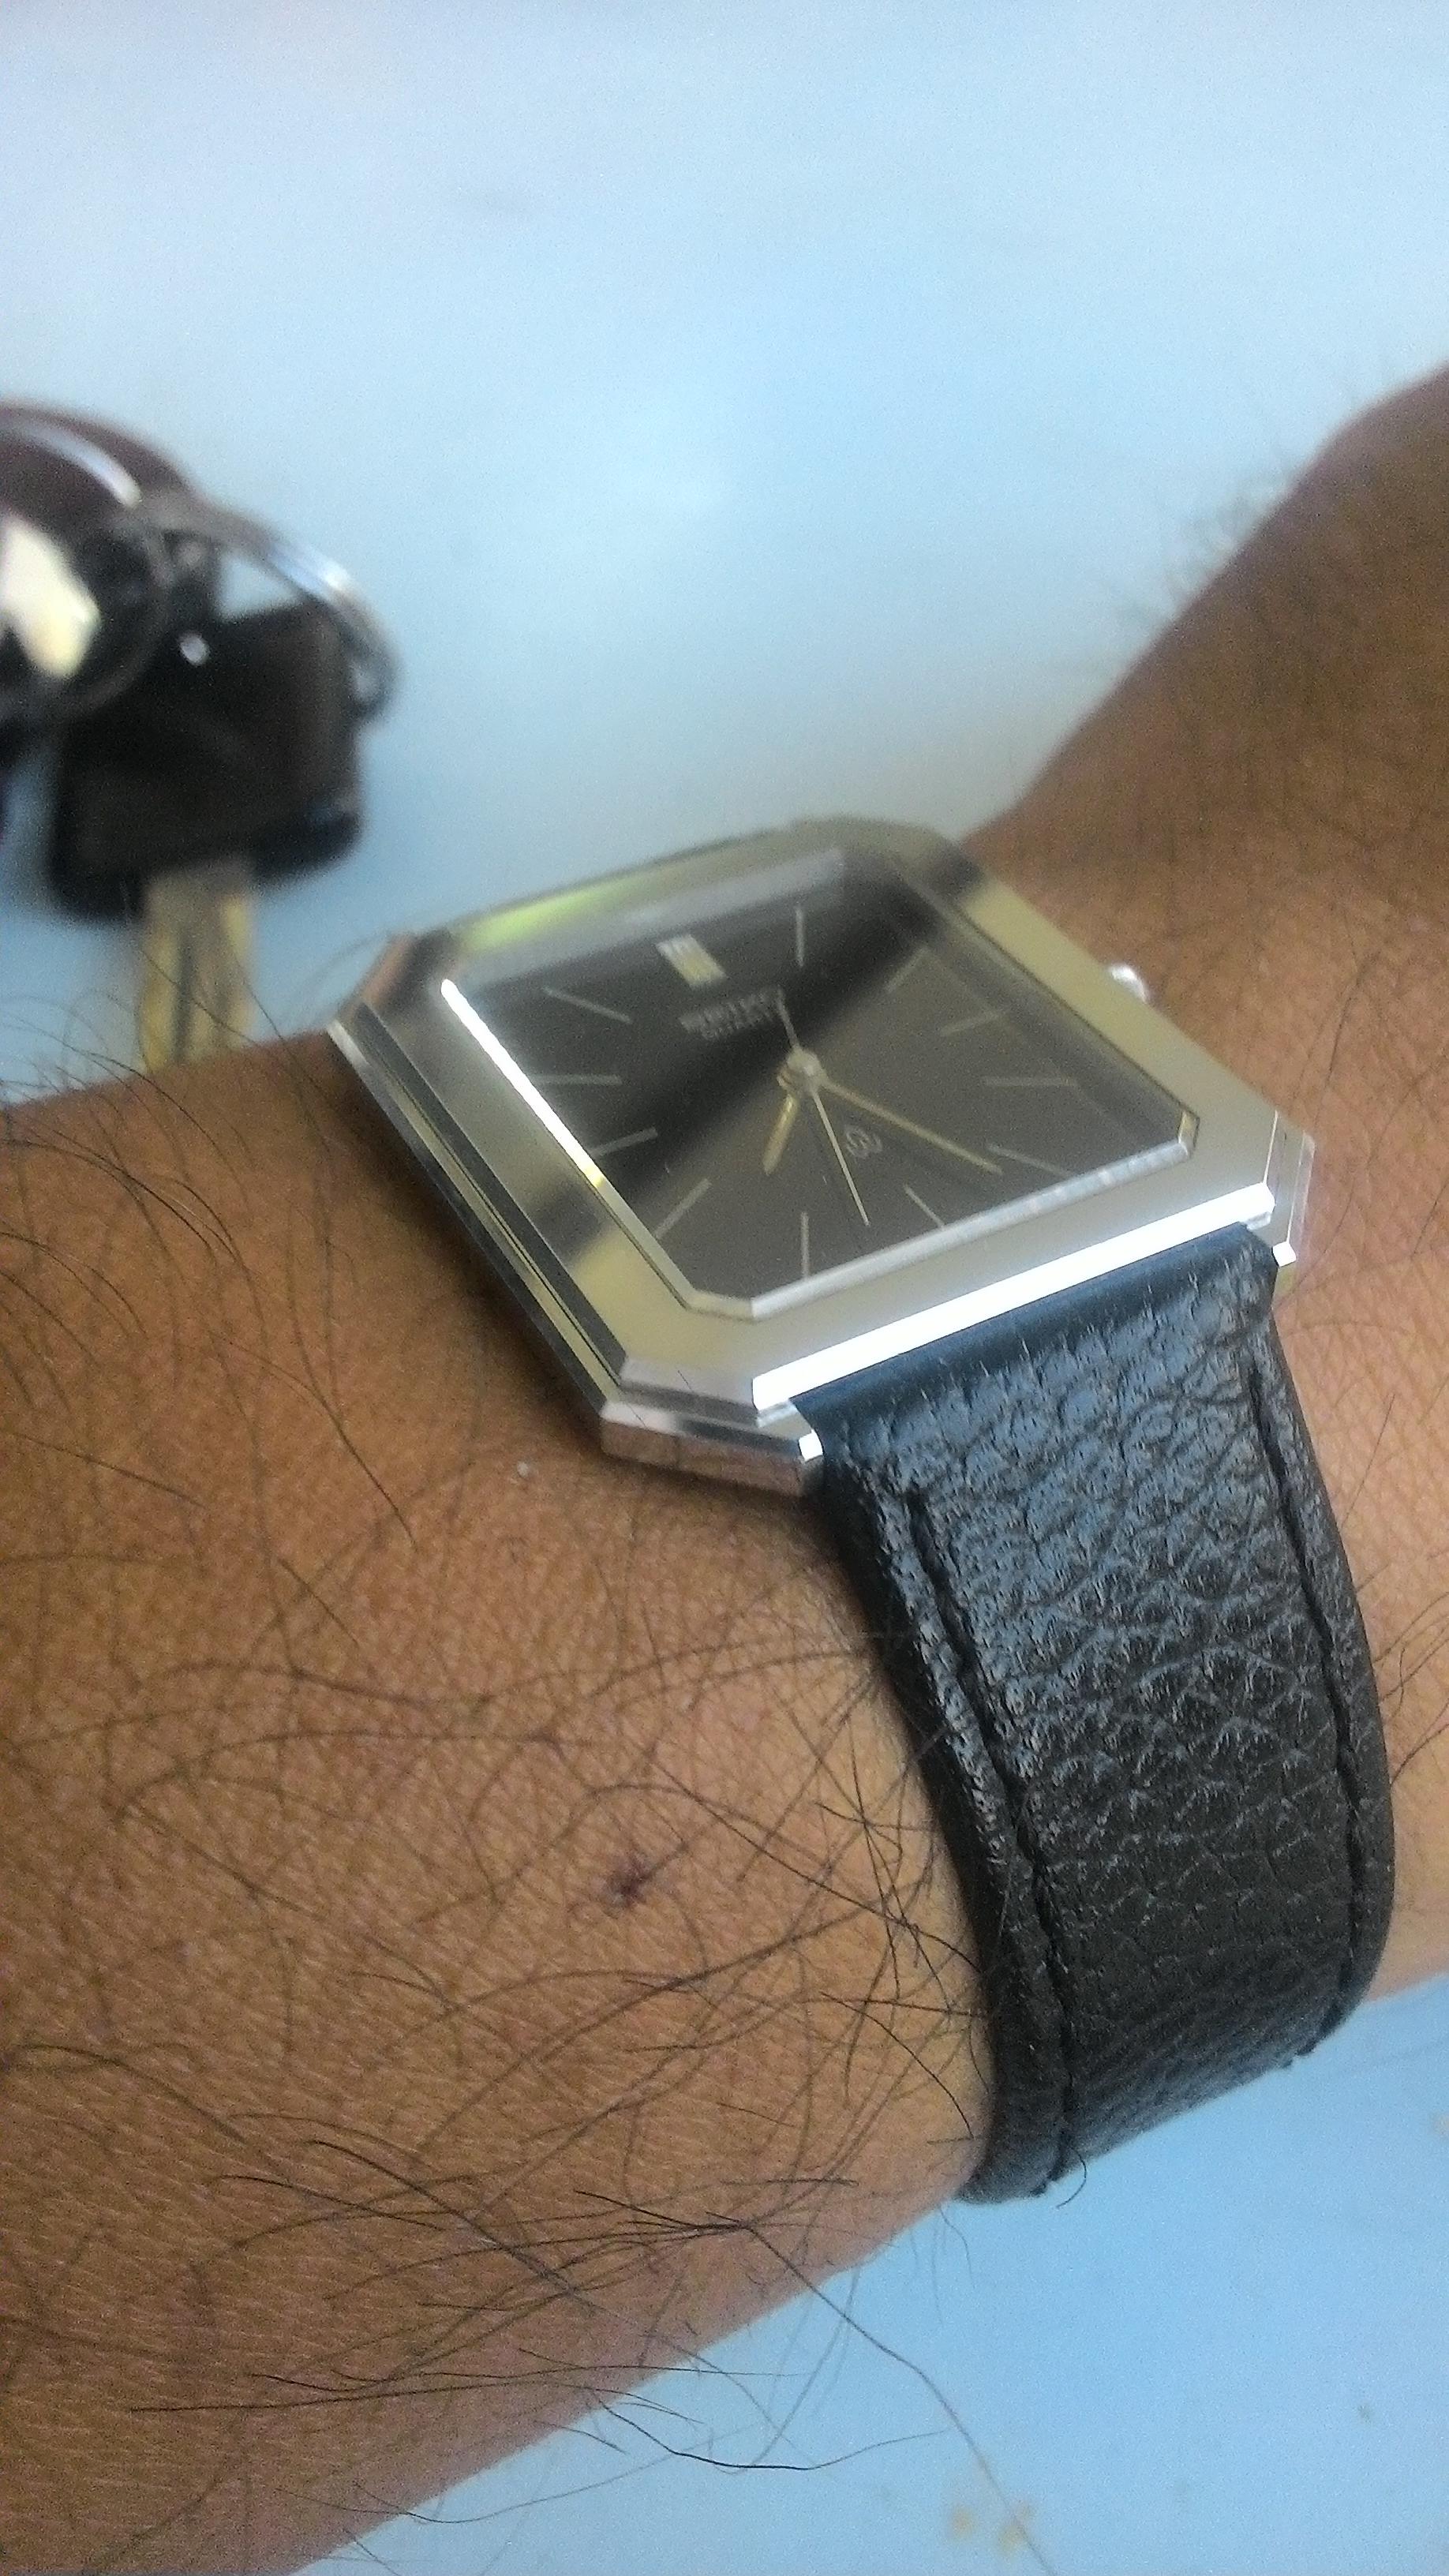 Seiko 6030-5120 dress watch - Your Watch Collection - Watch Repair Talk